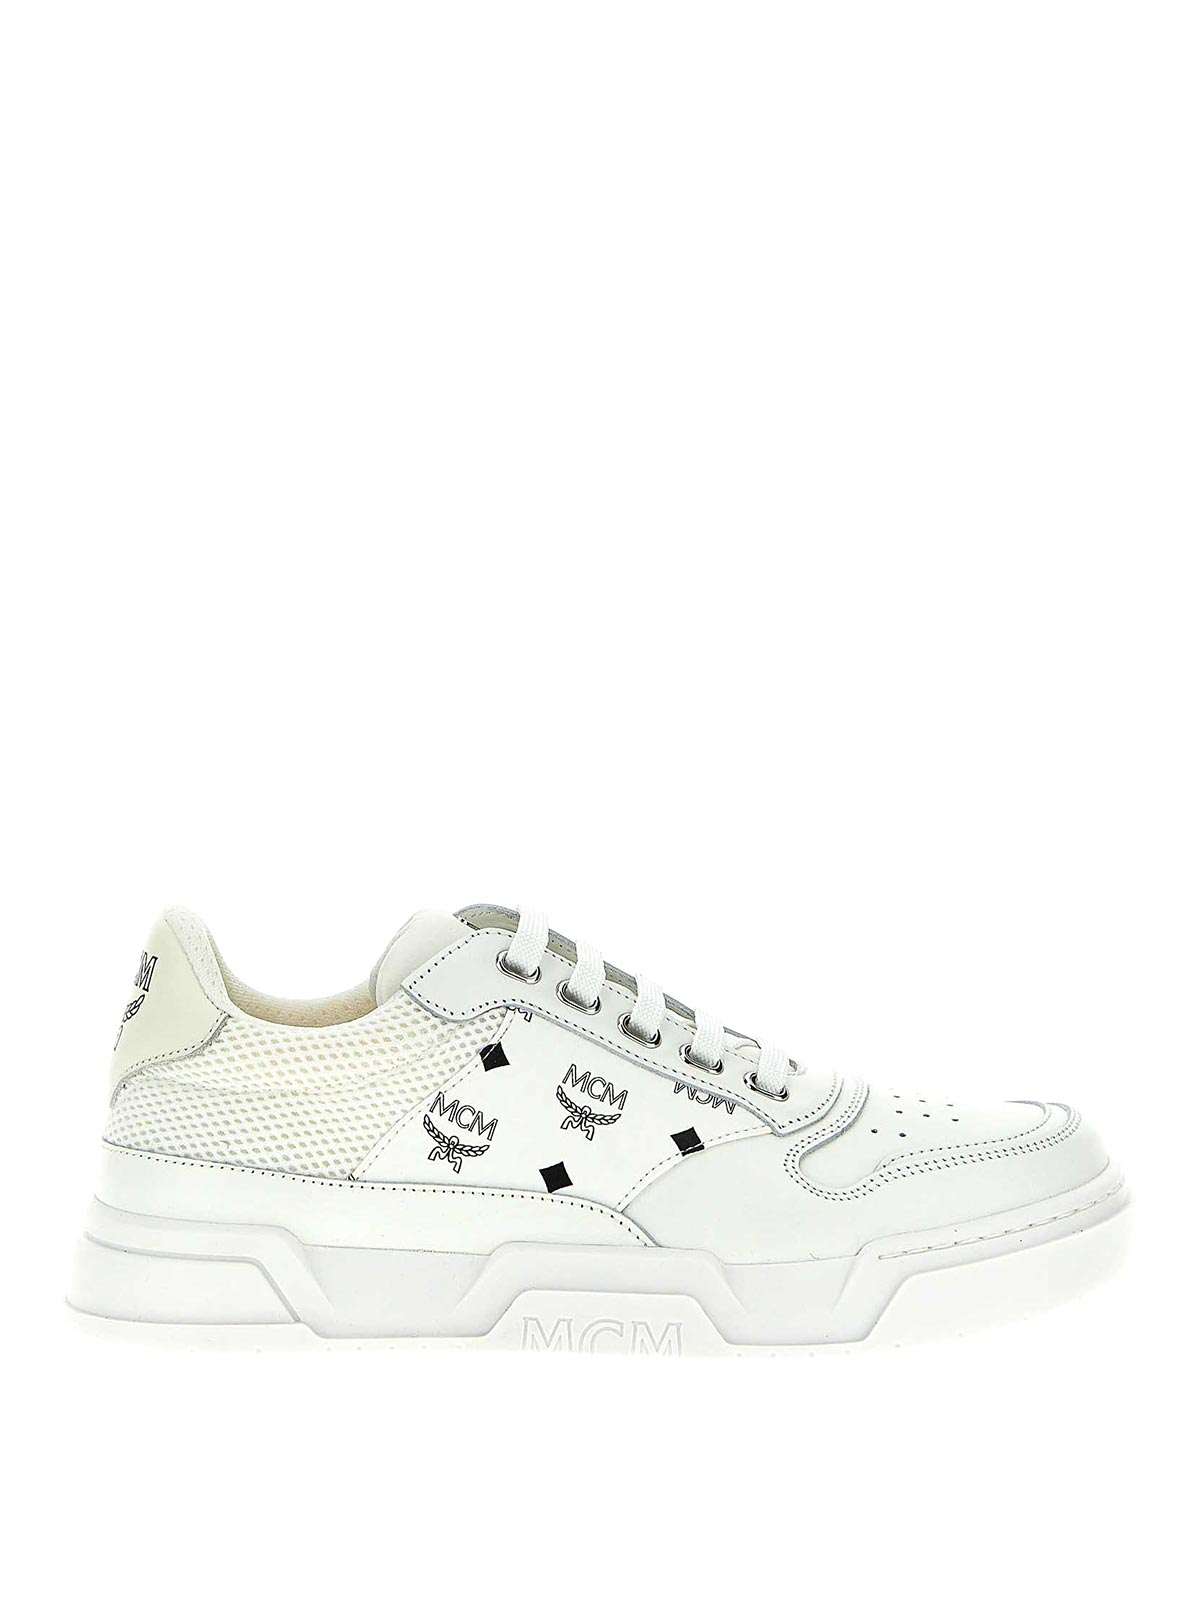 Mcm Skyward Sneakers In White